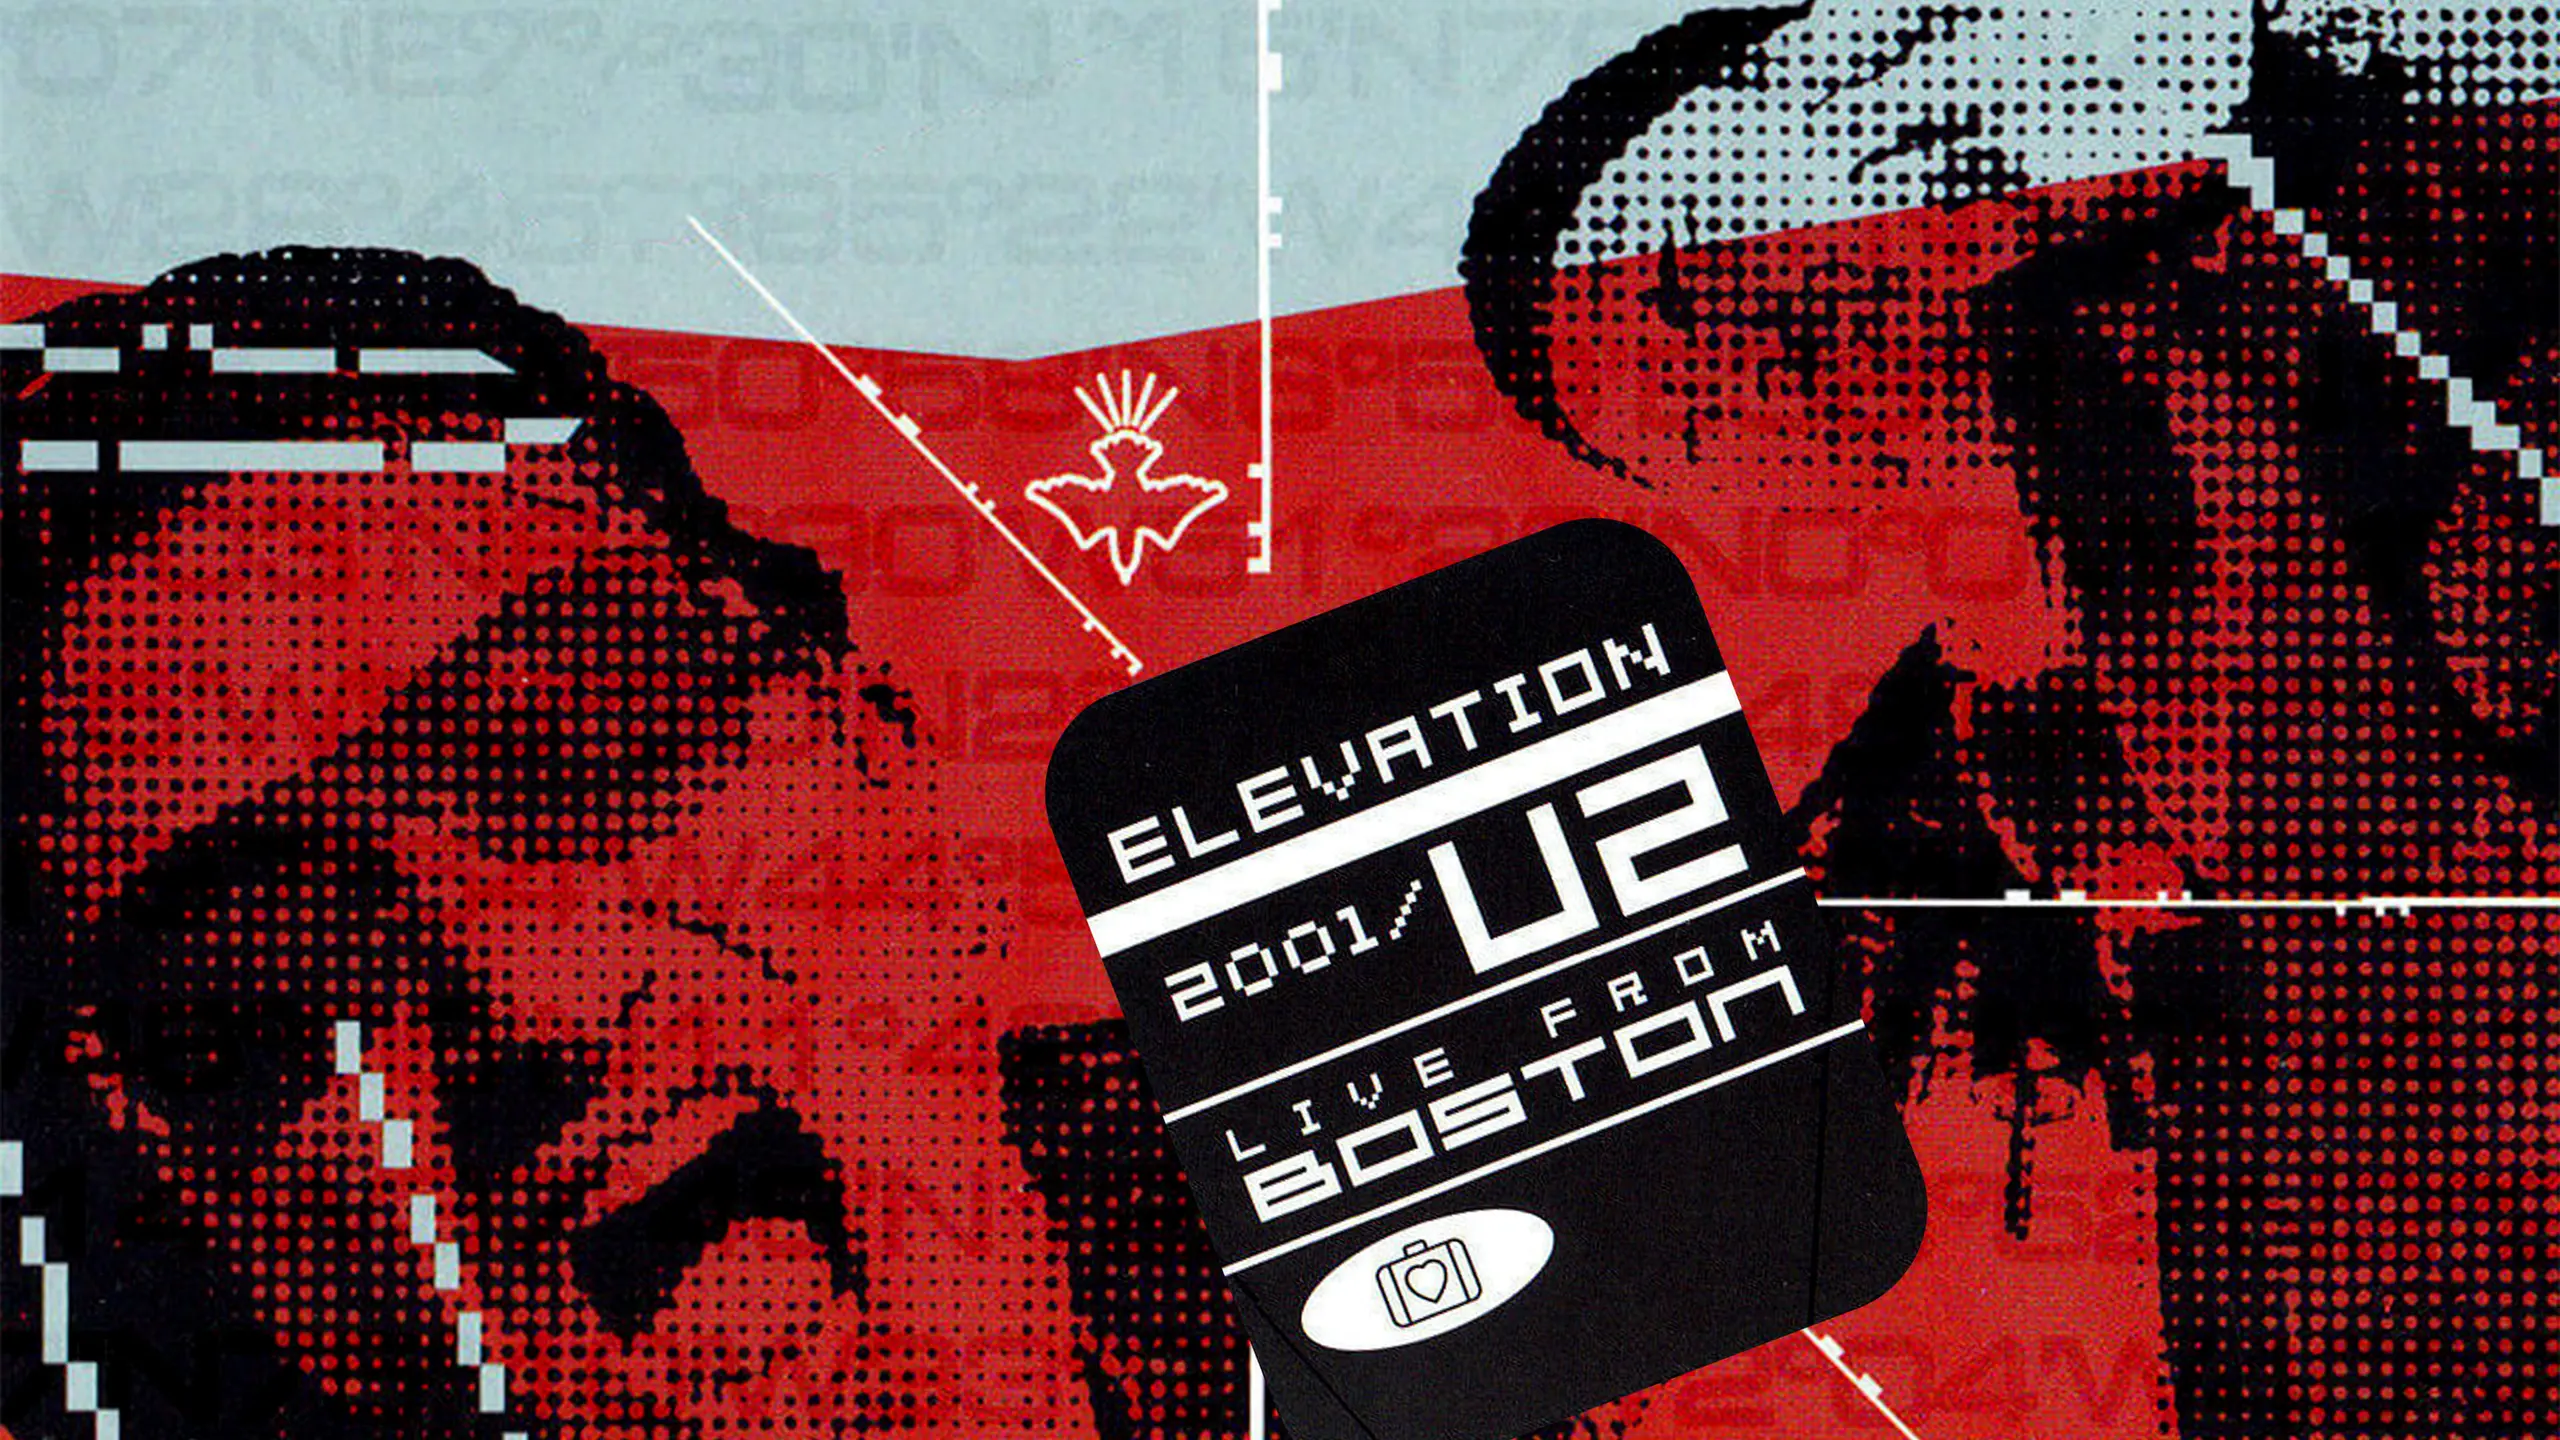 U2: Elevation 2001 - Live from Boston